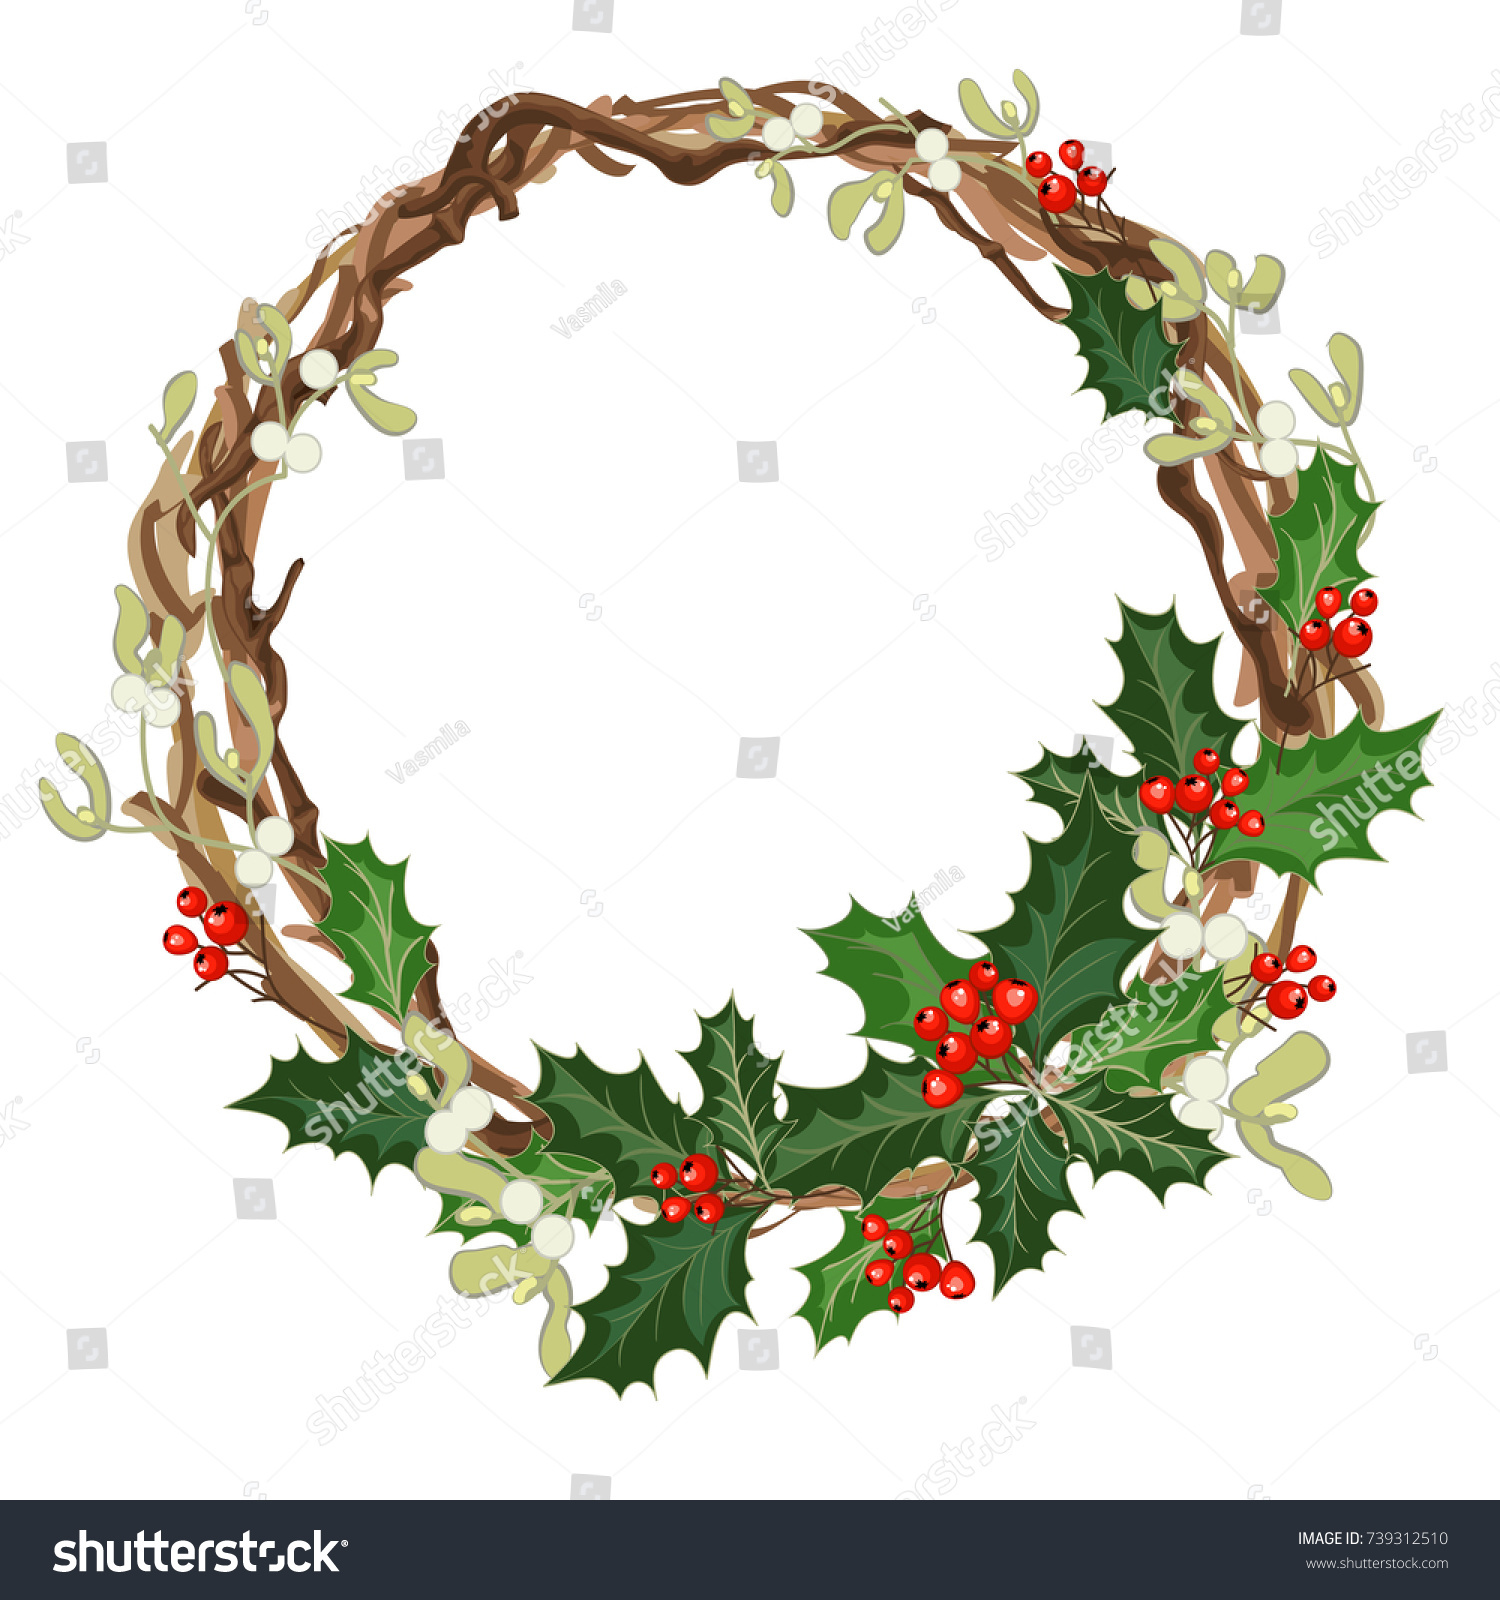 Details about   holly BErries Romantic Holiday Christmas mistletoe Mistle toe Ornament Decor 